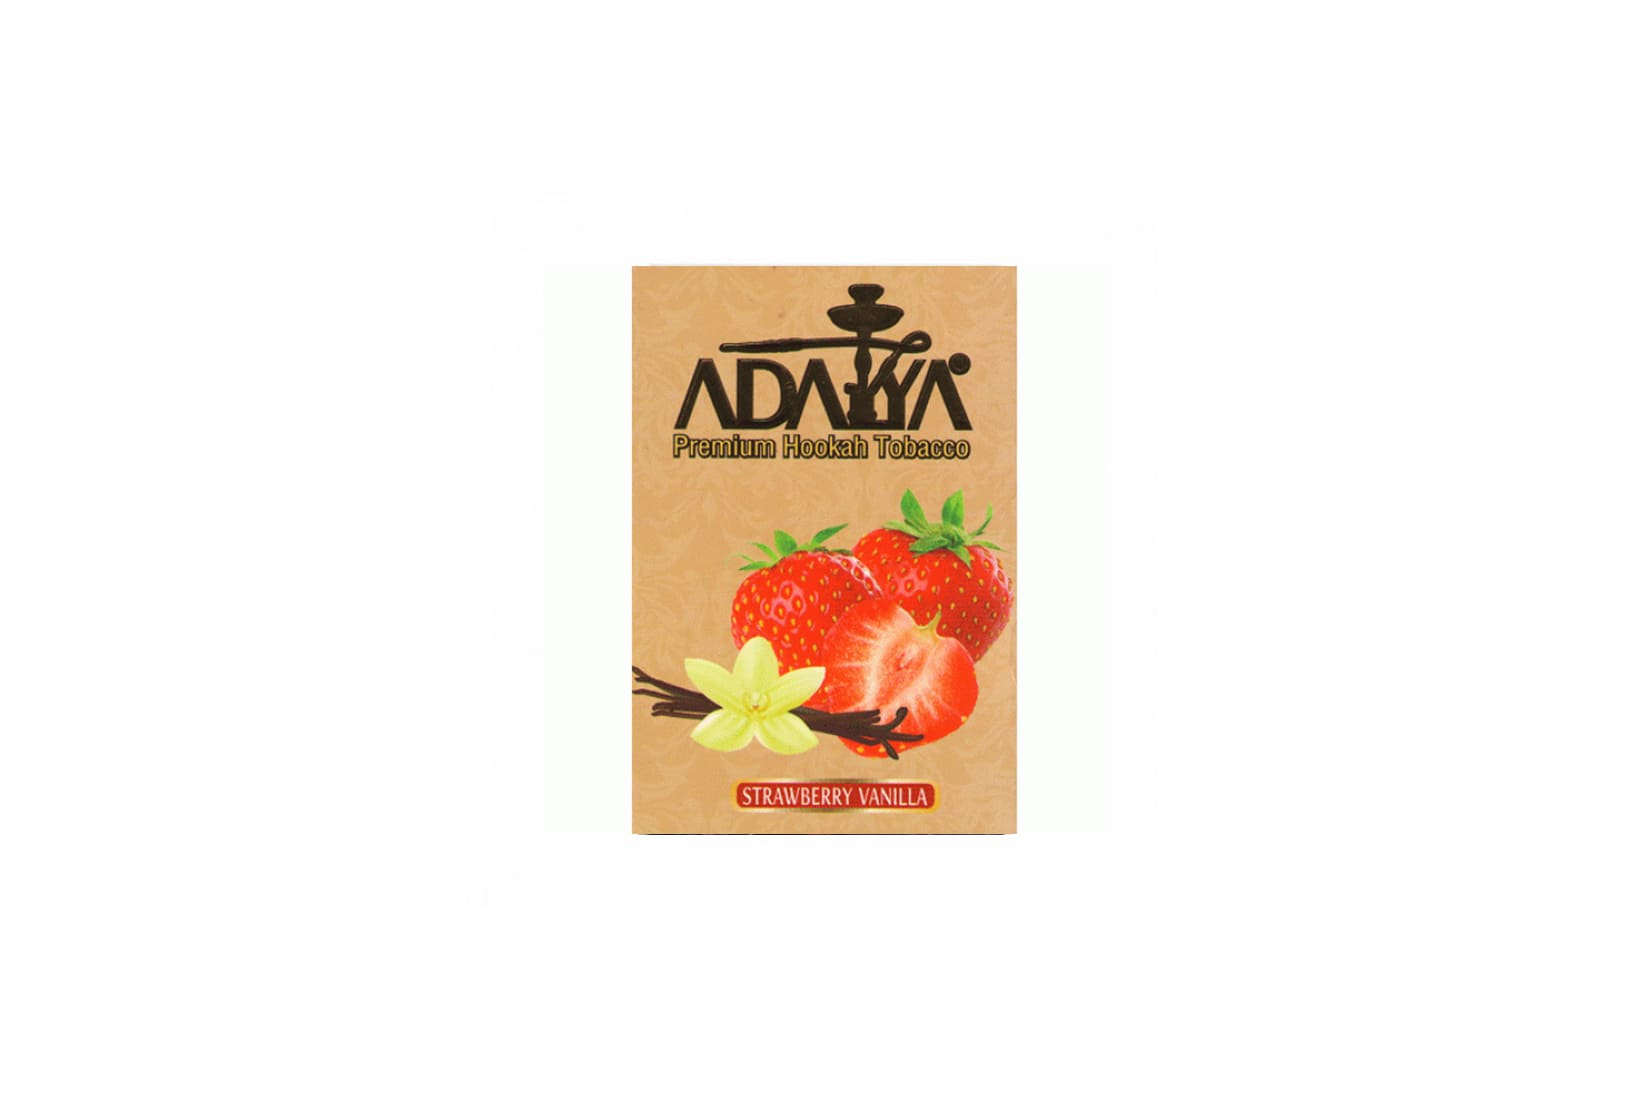 Табак для кальяна Adalya Strawberry-Vanilla  – описание, отзывы, миксы